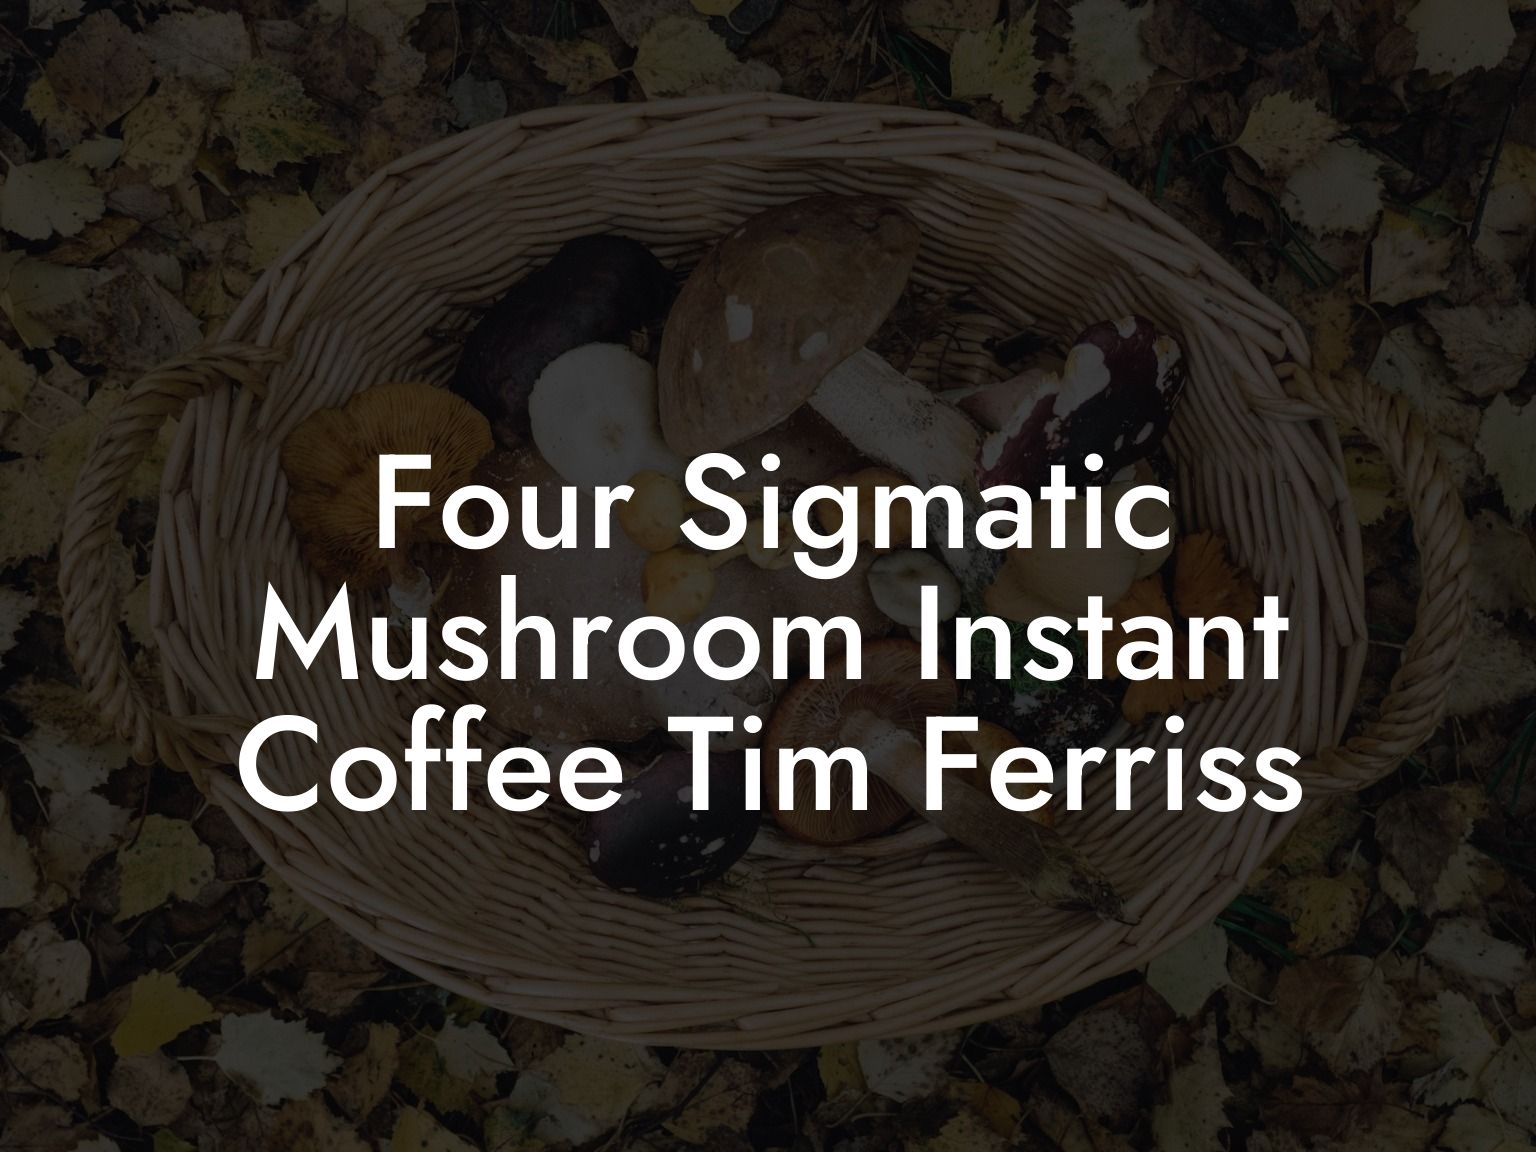 Four Sigmatic Mushroom Instant Coffee Tim Ferriss